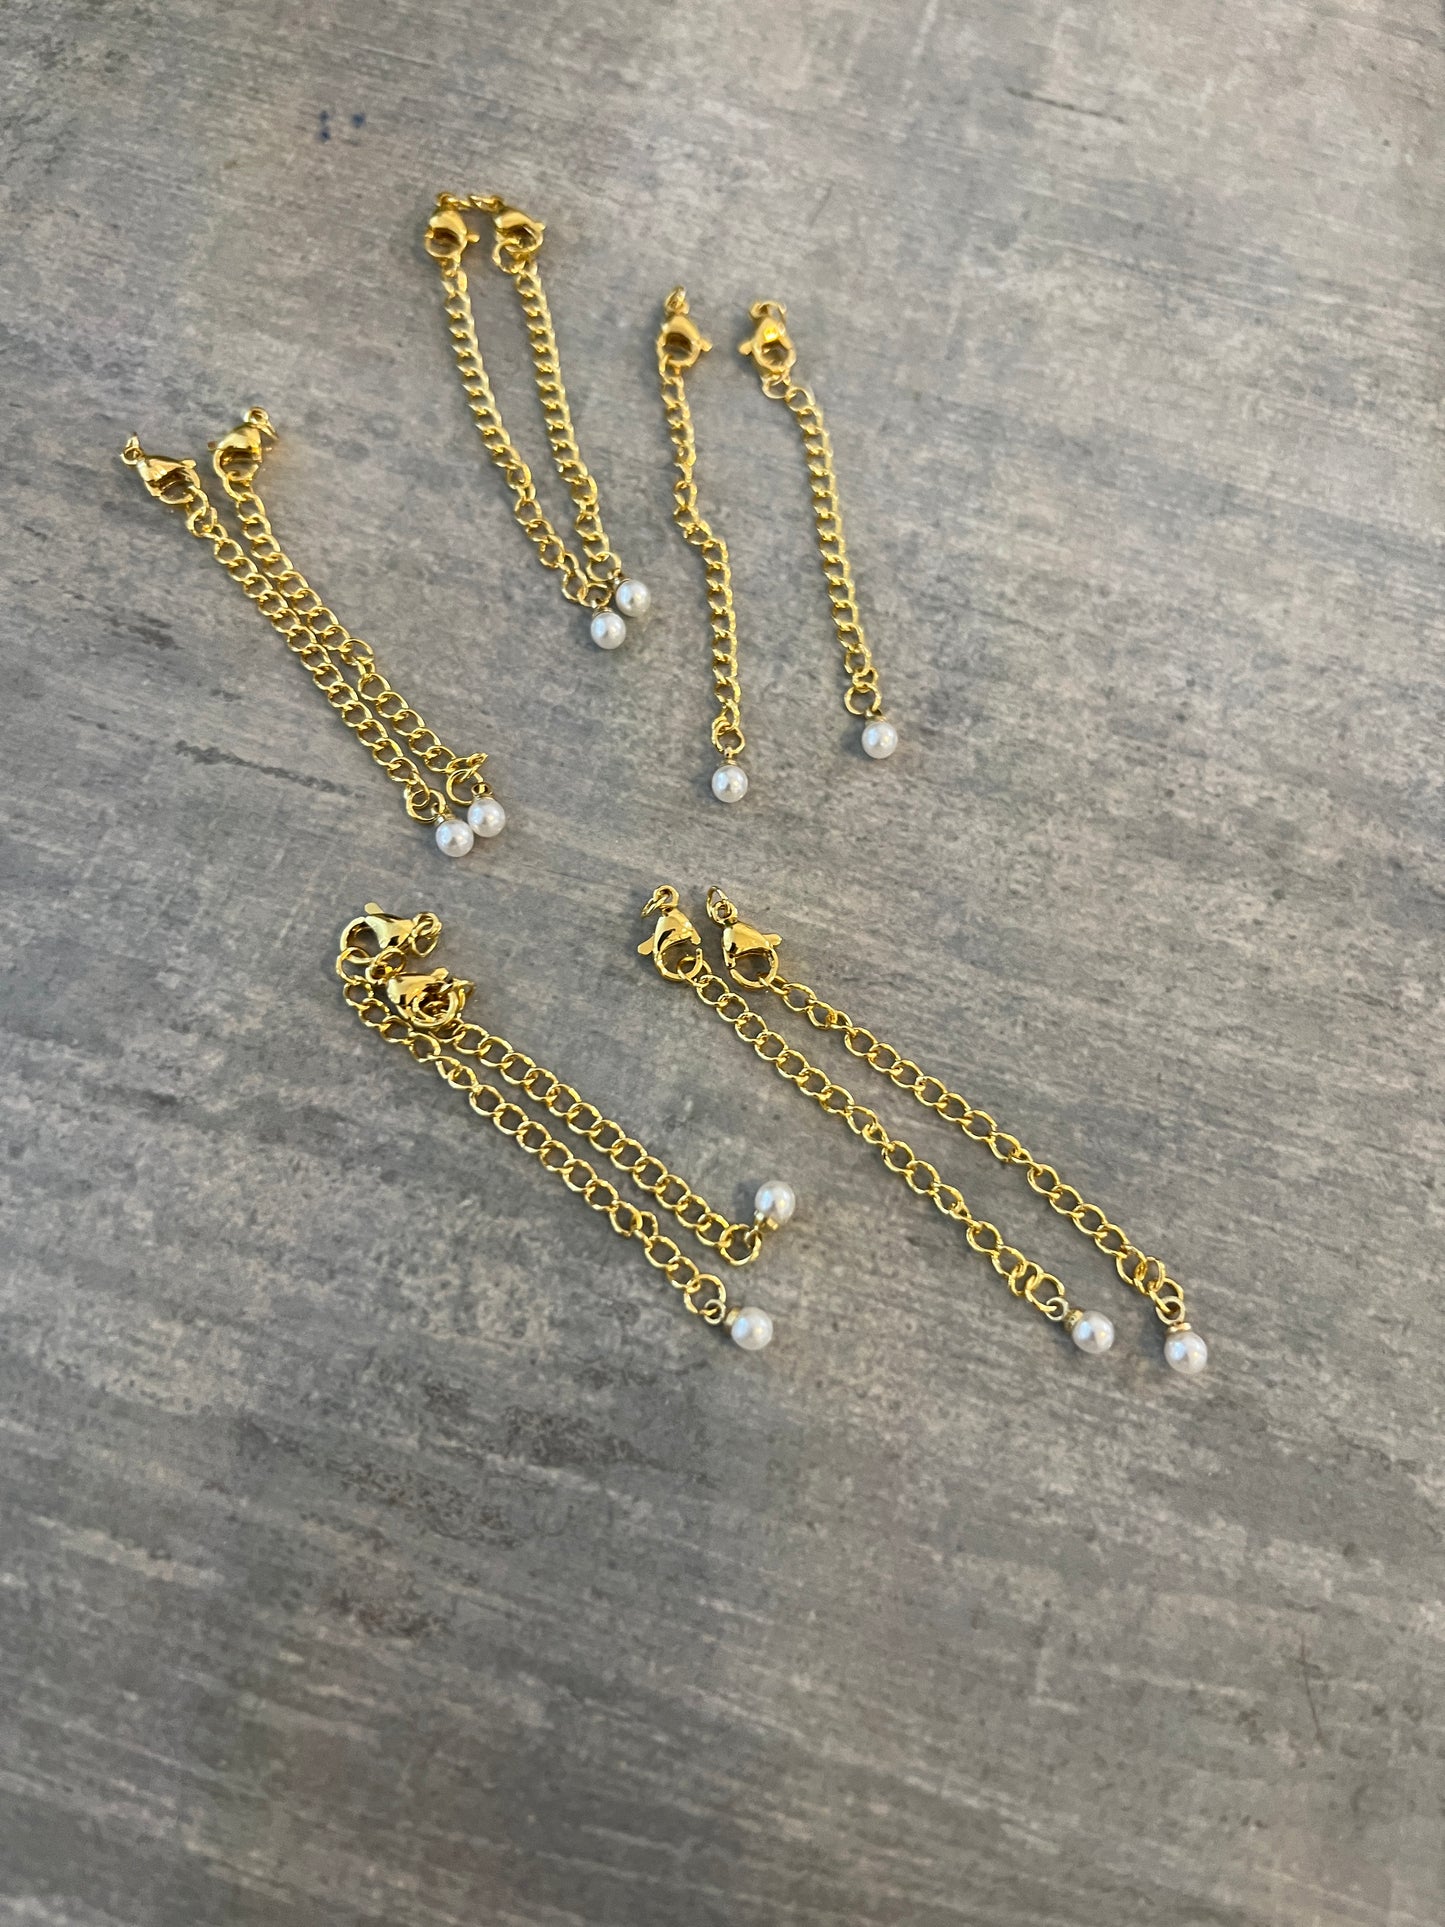 Necklace or bracelet extensors